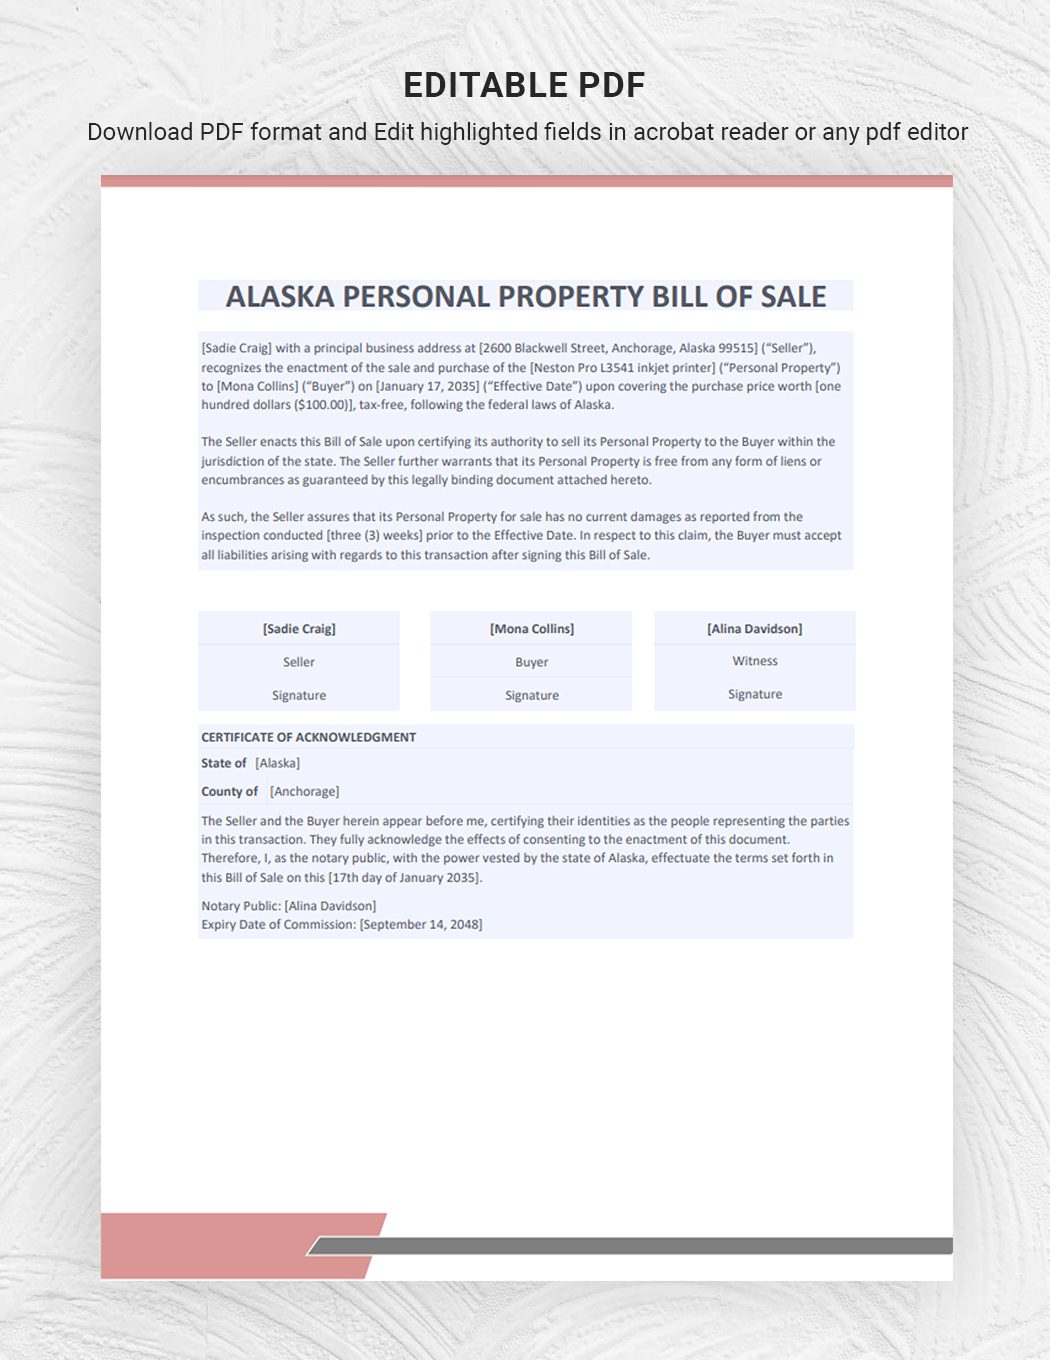 Alaska Personal Property Bill of Sale Template